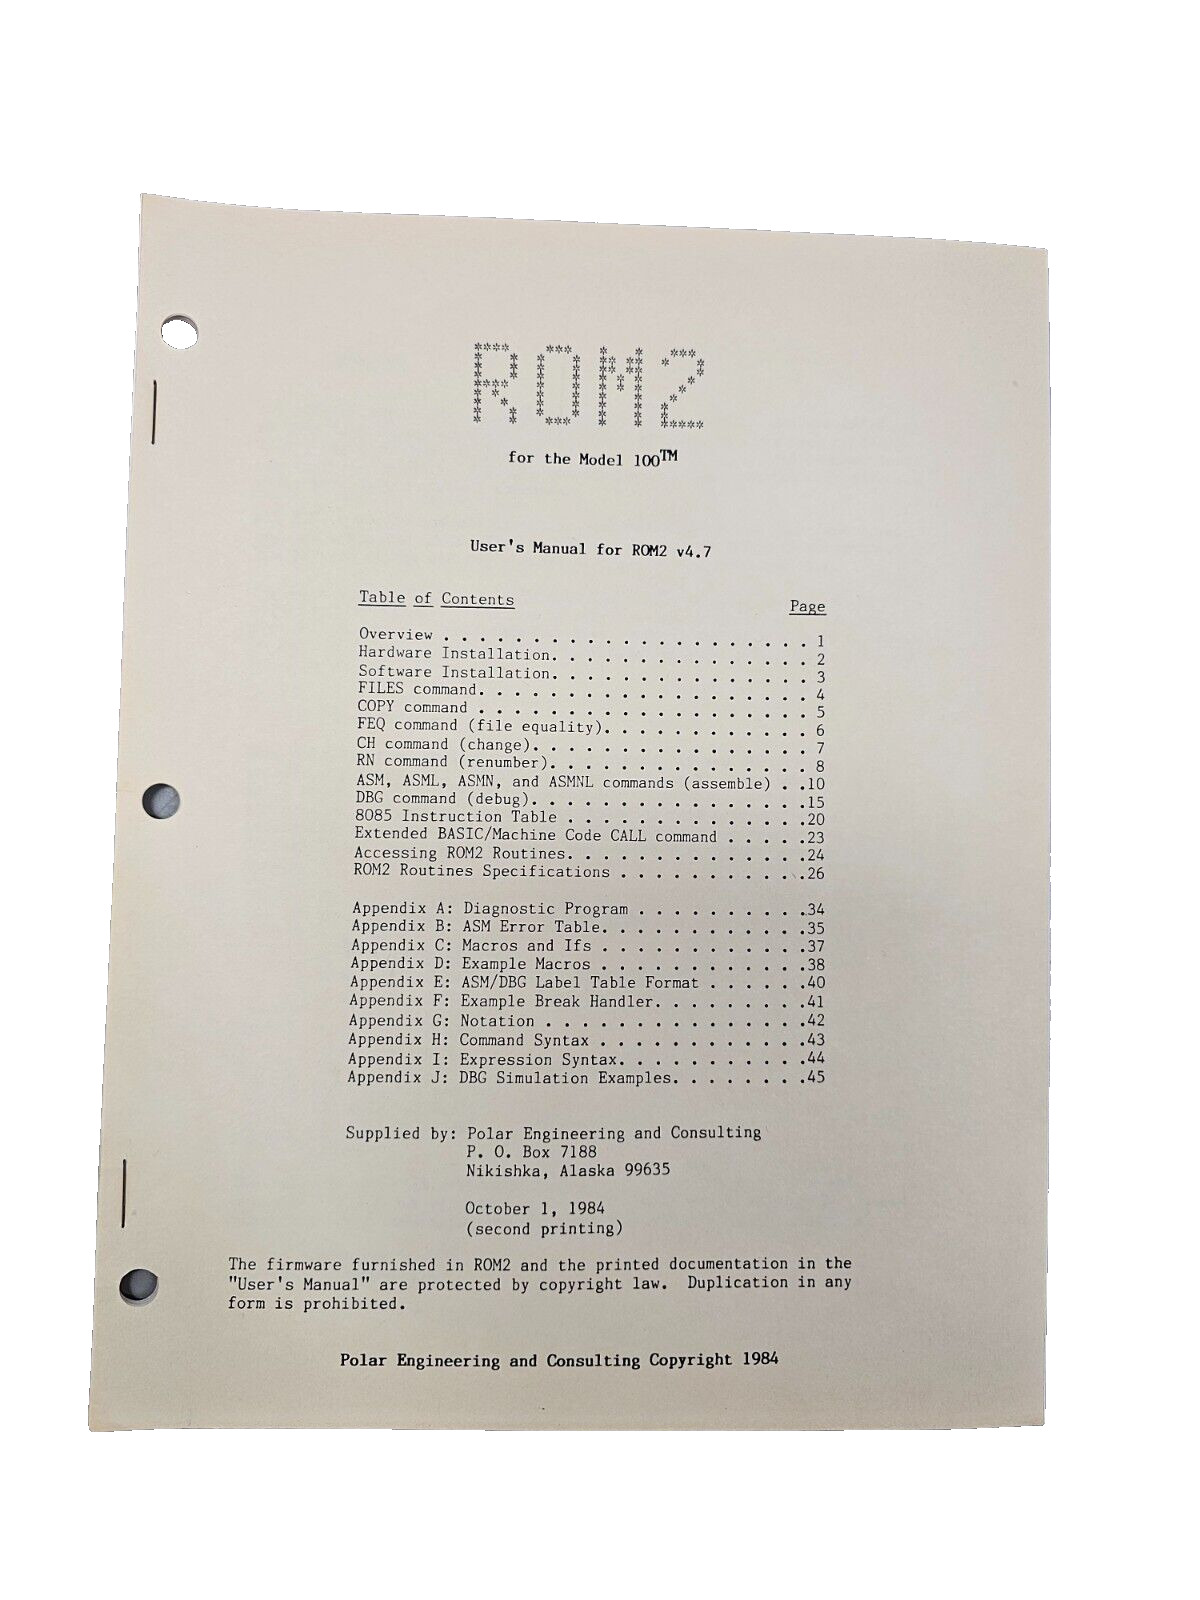 Vintage 1984 Polar Engineering ROM2 v4.7 User's Manual for Model 100